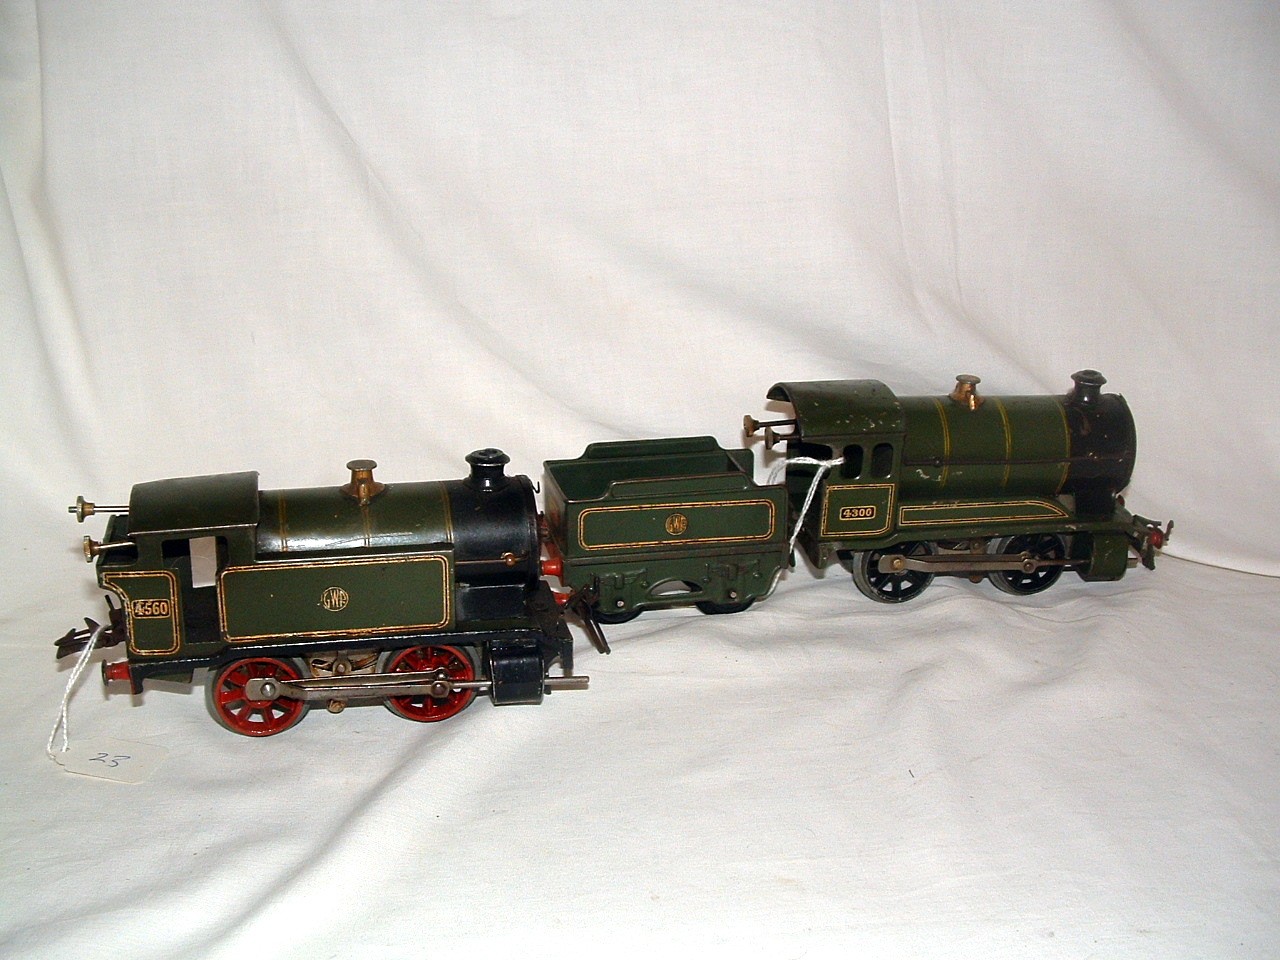 HORNBY 0 Gauge 2 x GWR C/W Locomotives - No 1 0-4-0 Tender Locomotive no 4300 c 1938 - Green lined - Image 2 of 2